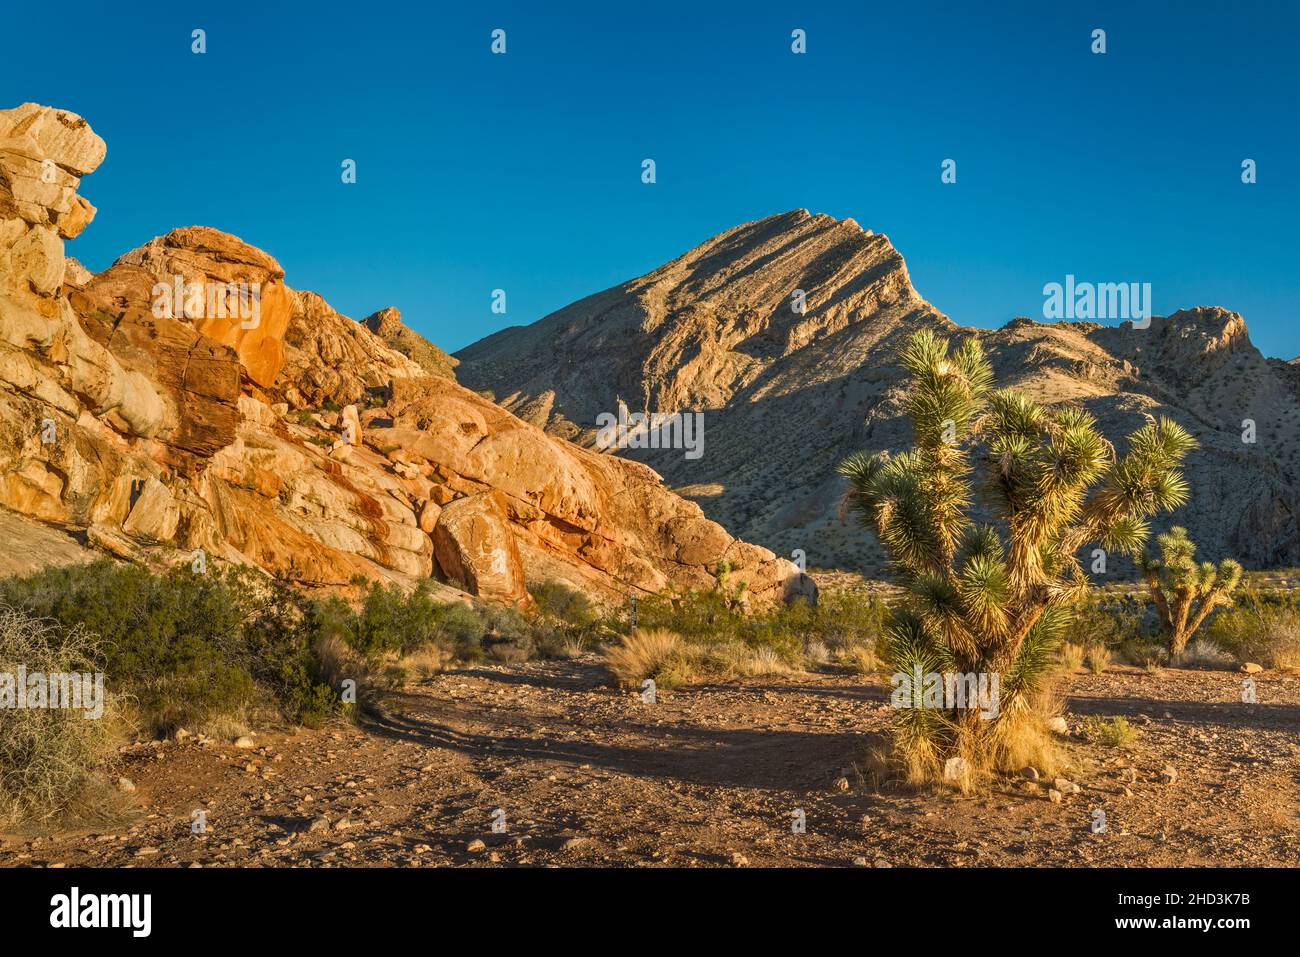 Joshua Trees, Jurassic Sandstone Rocks, Palaeozoic marine Limestone Massiv, Sunrise, Whitney Pocket Area, Gold Butte National Monument, Nevada, USA Stockfoto